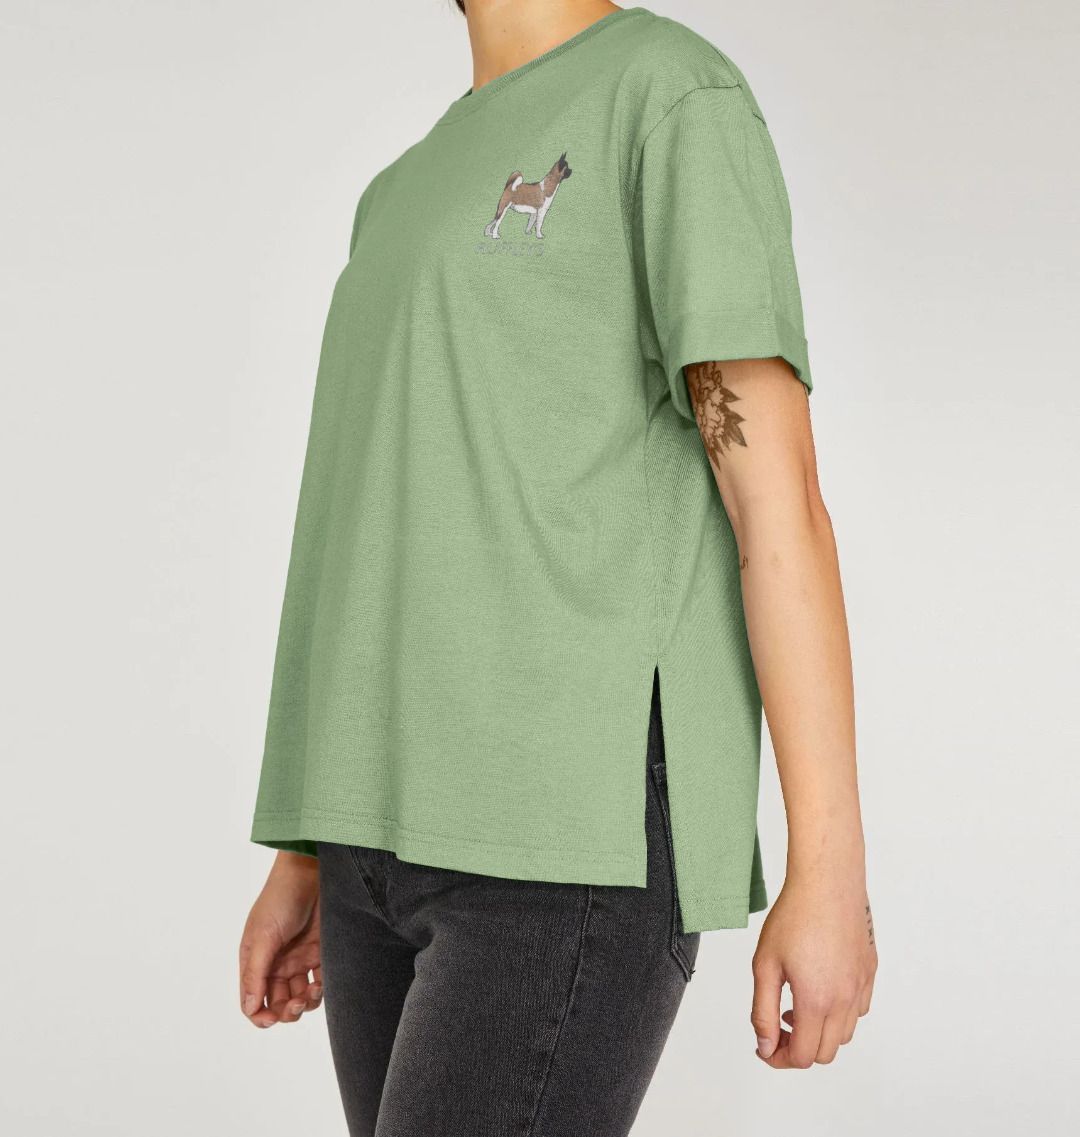 Akita - Relaxed Fit T-Shirt